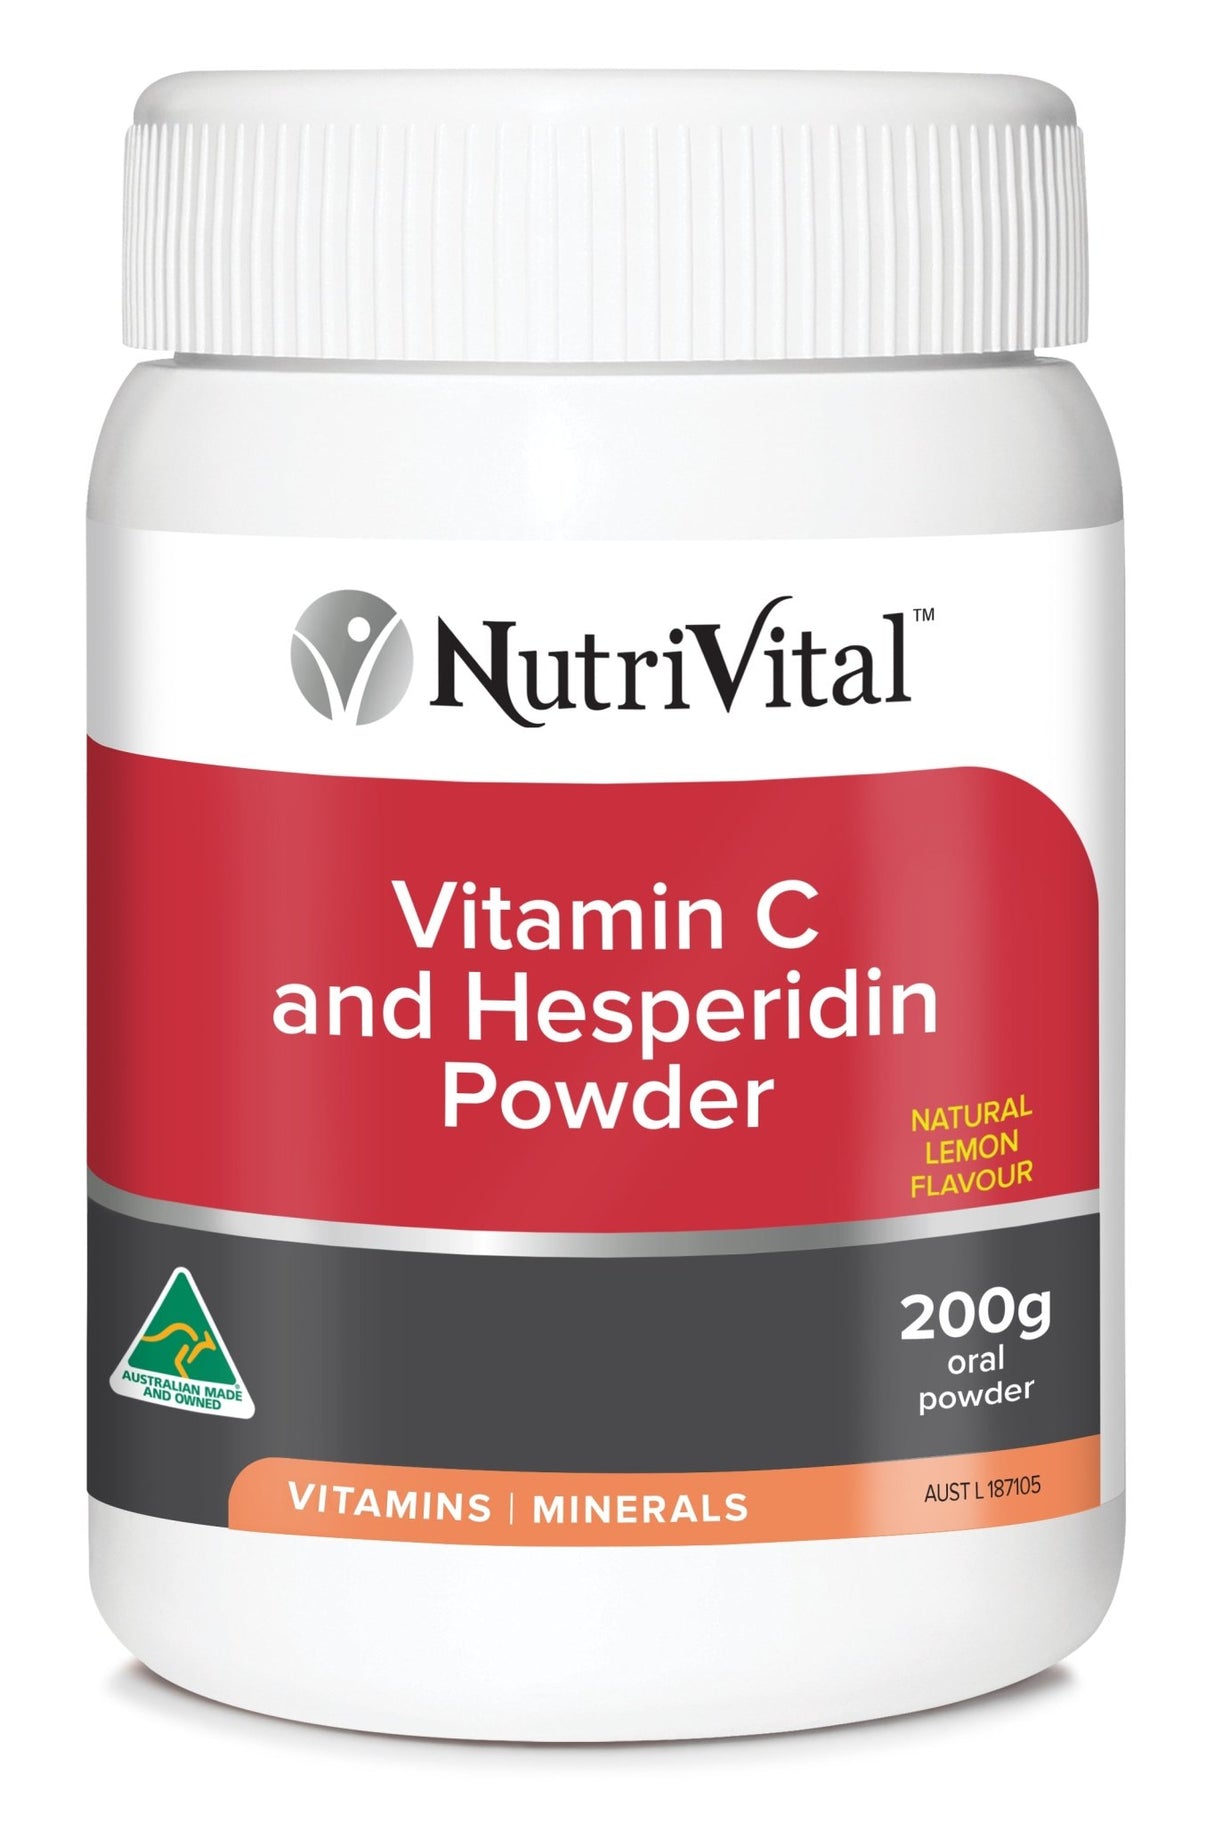 NutriVital Vitamin C and Hesperidin Powder 200gm Powder - Dr Earth - Supplements, Nutrivital